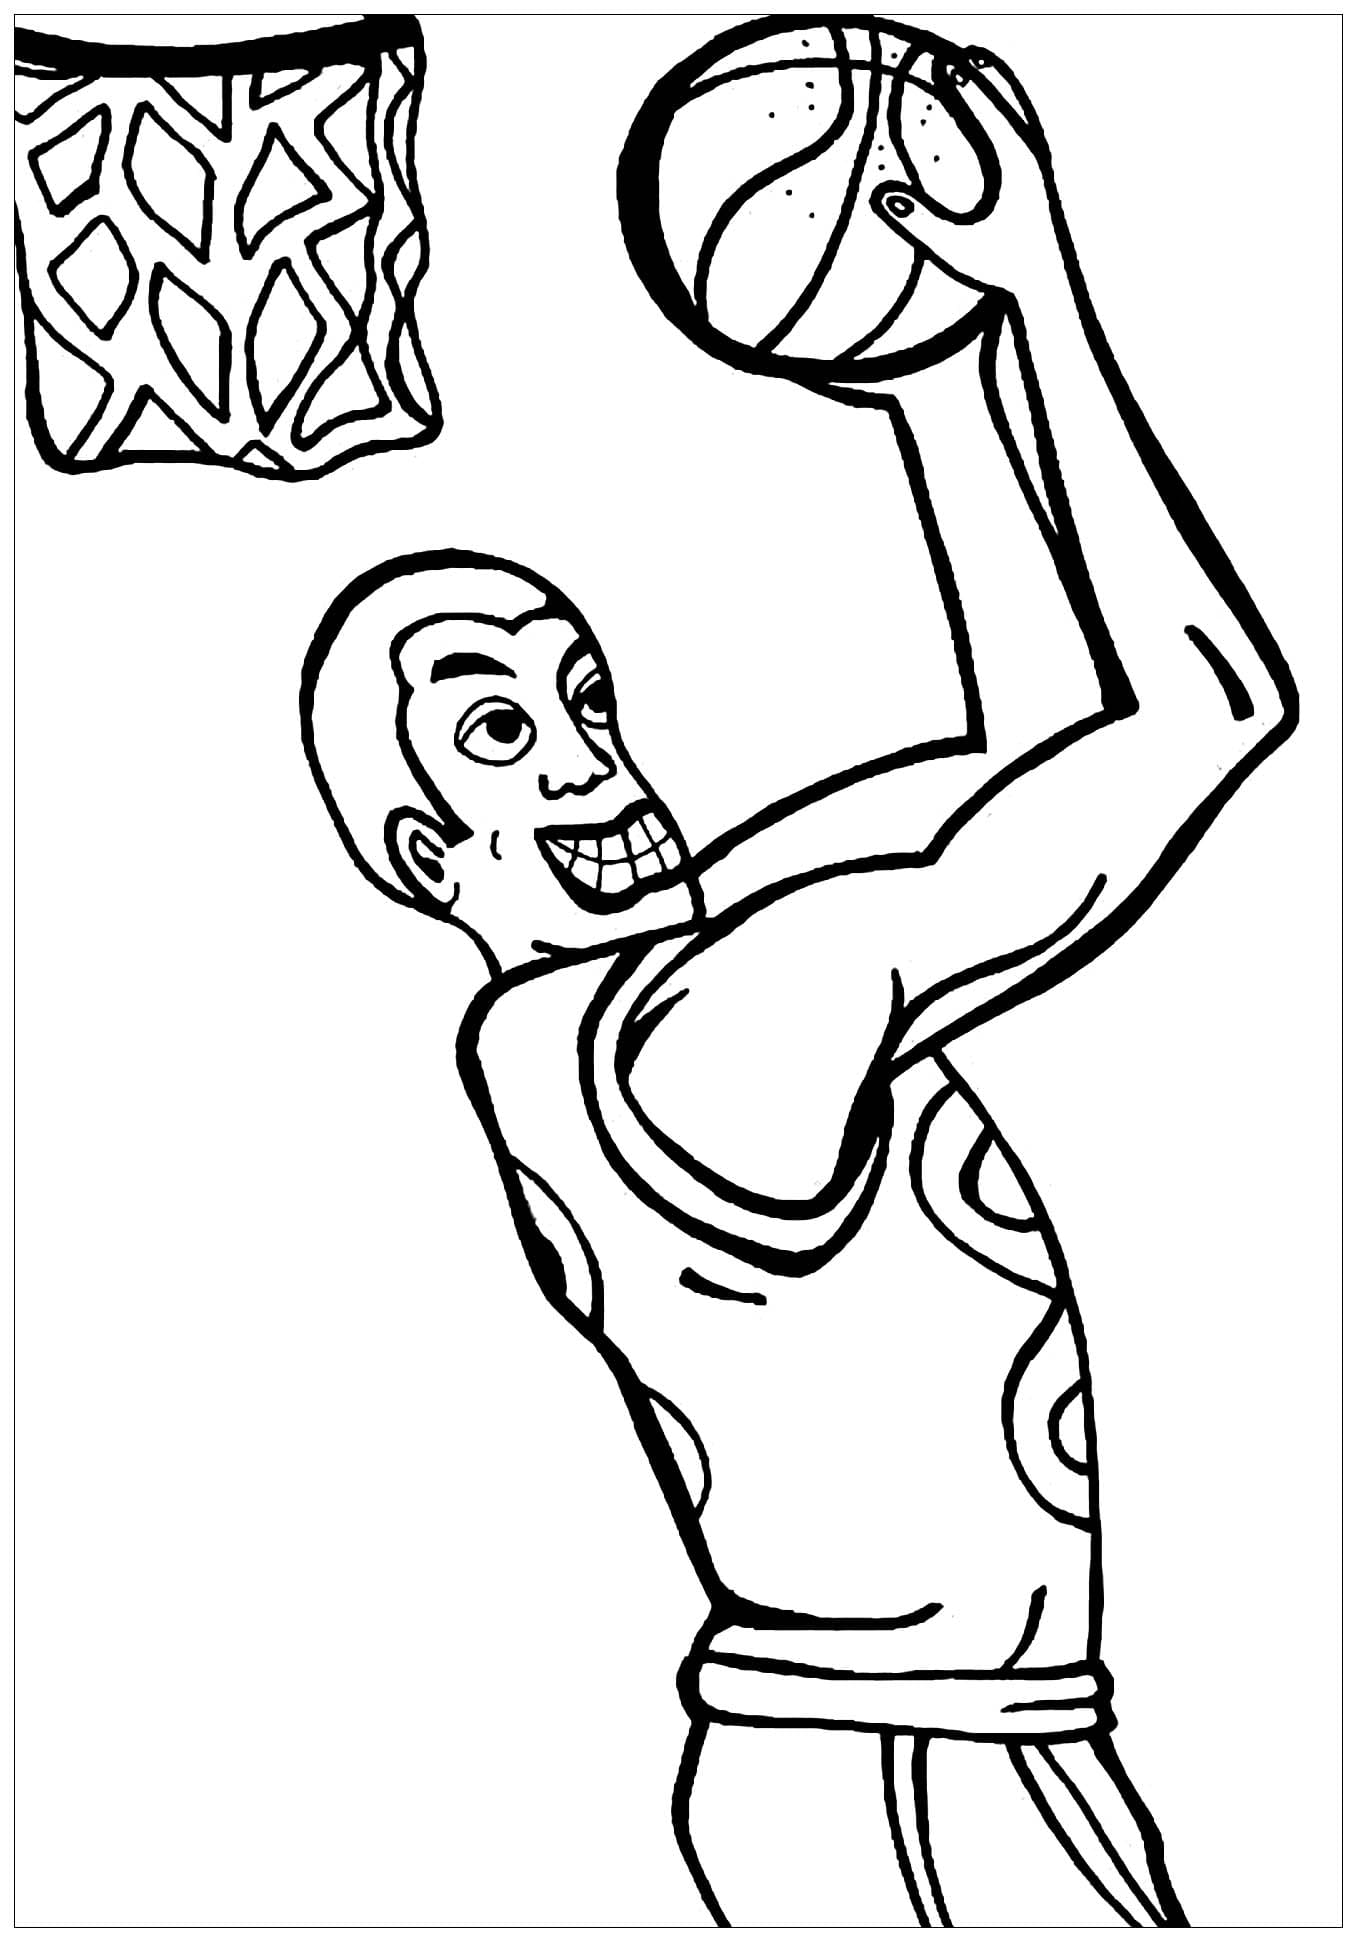 Man Playing Basketball Image Coloring Page